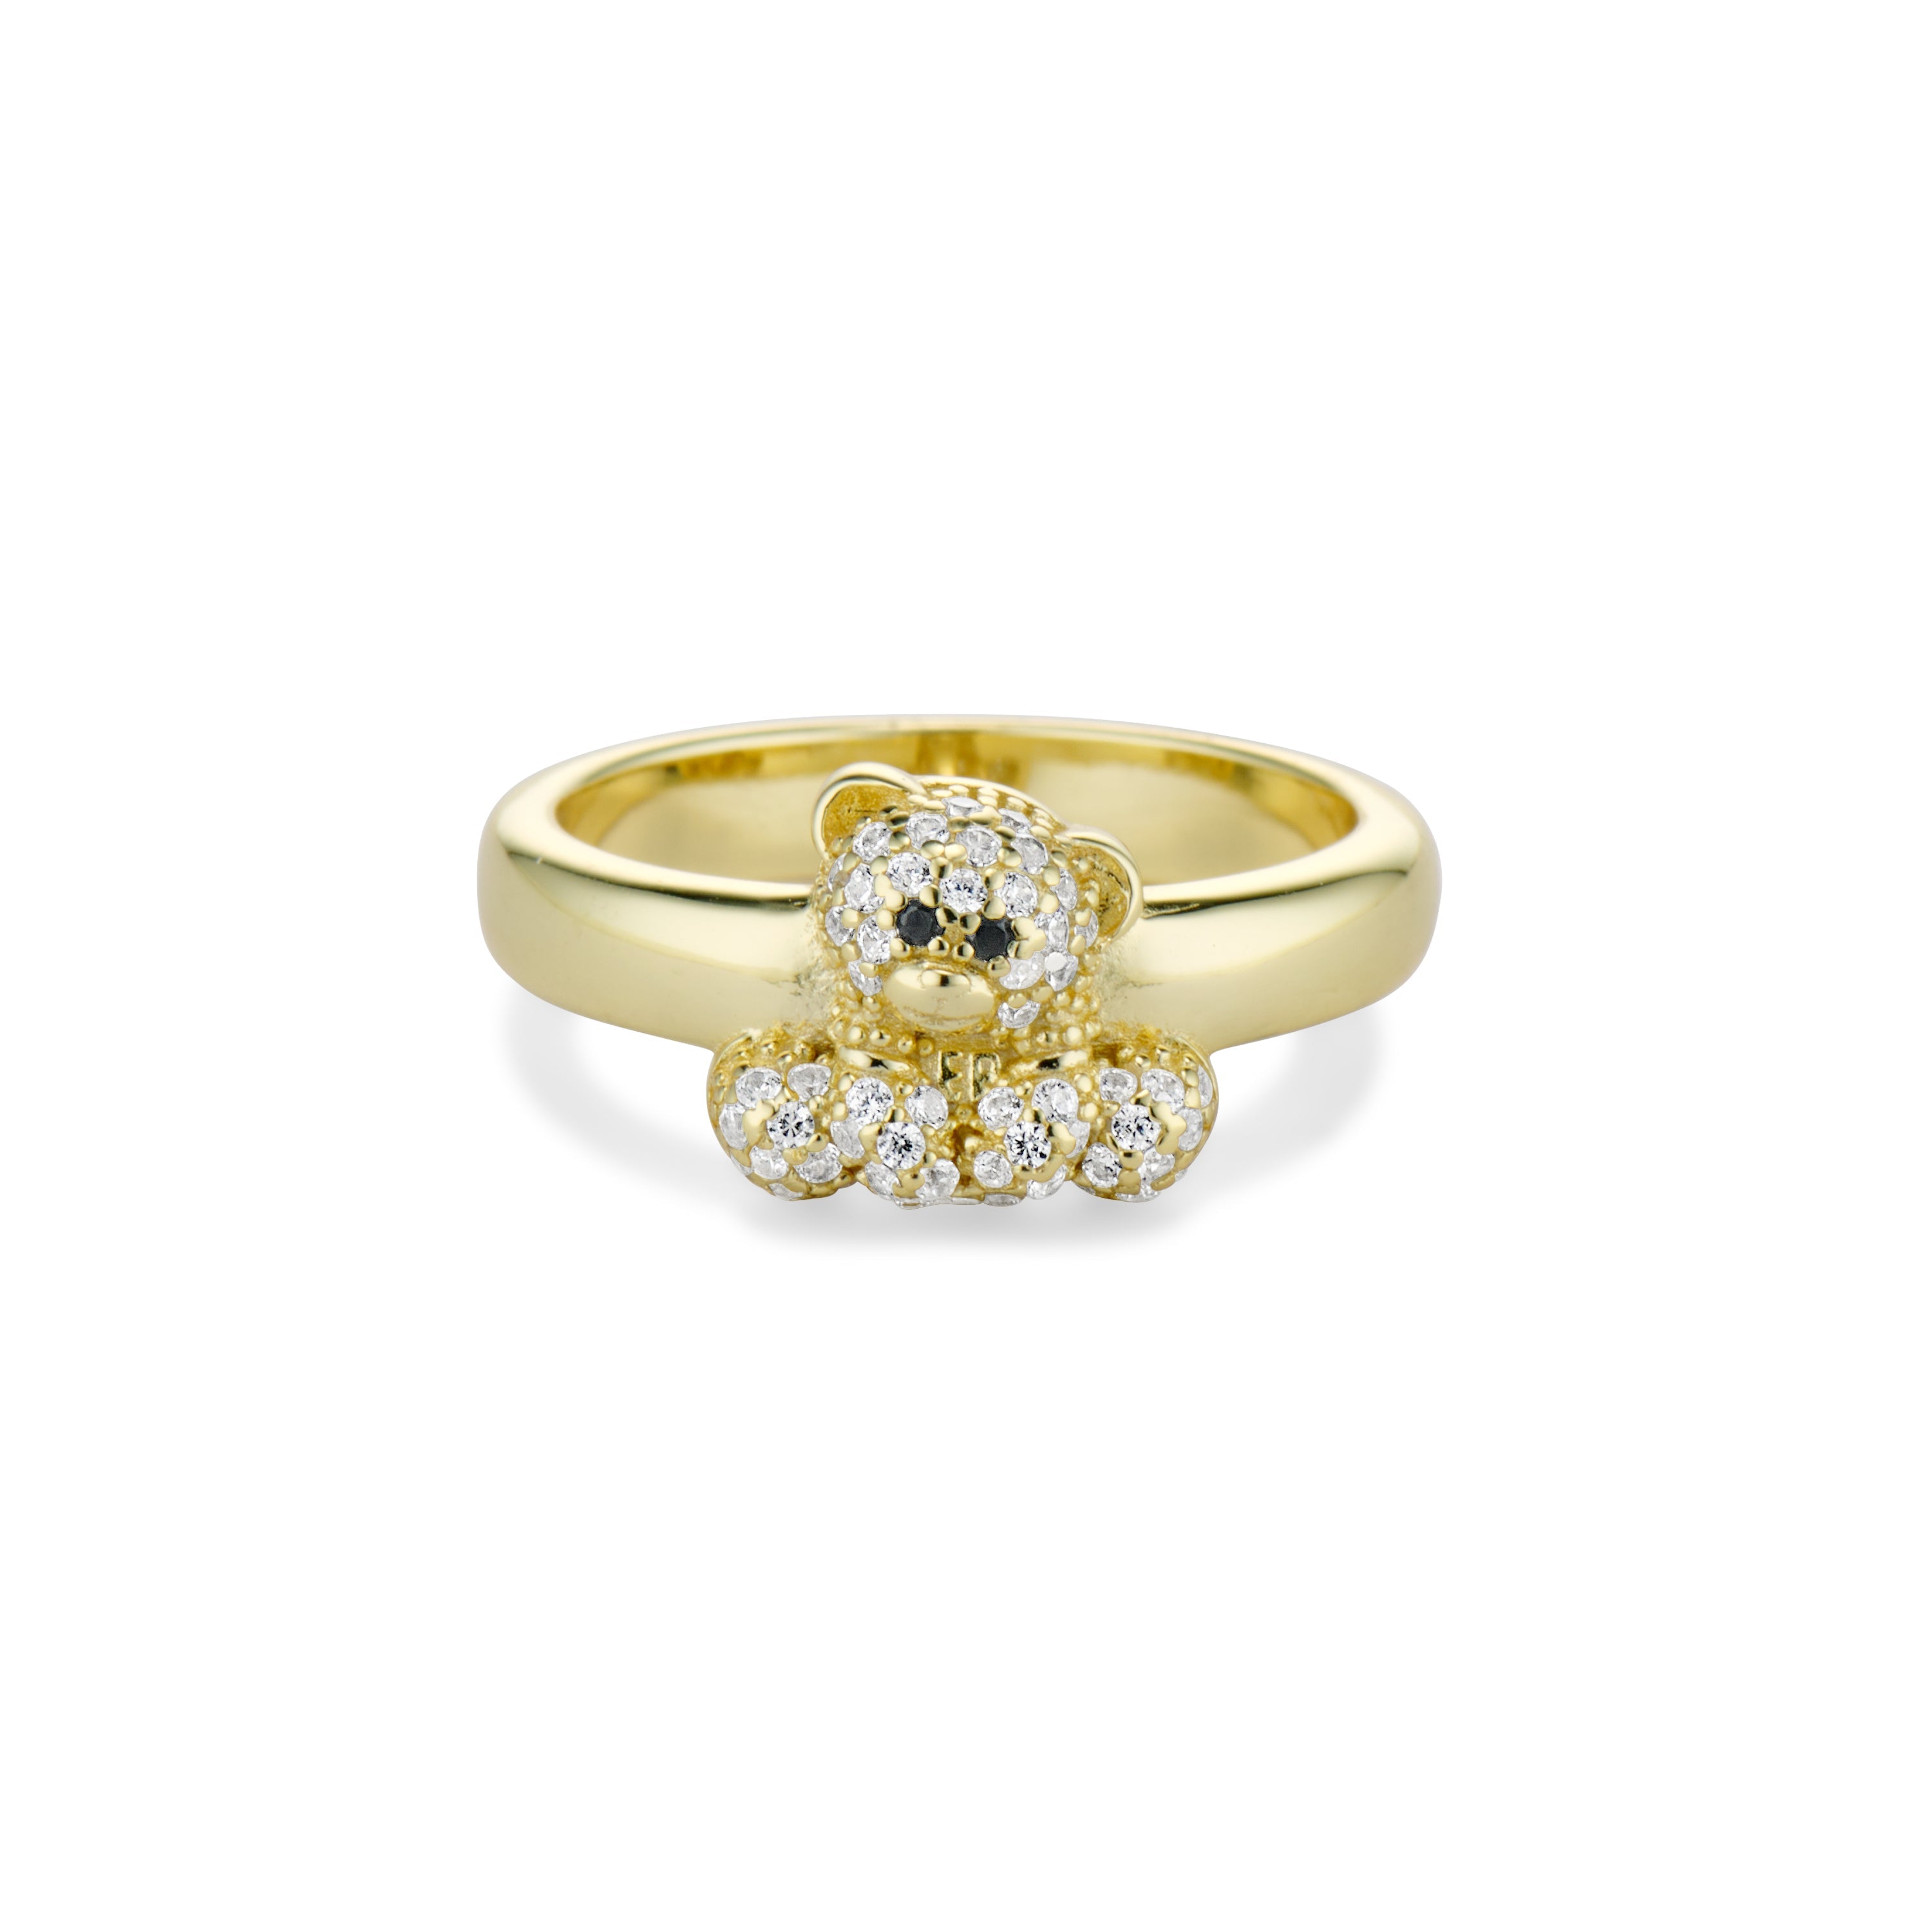 Teddy Bear Ring 14K Gold Jewelry